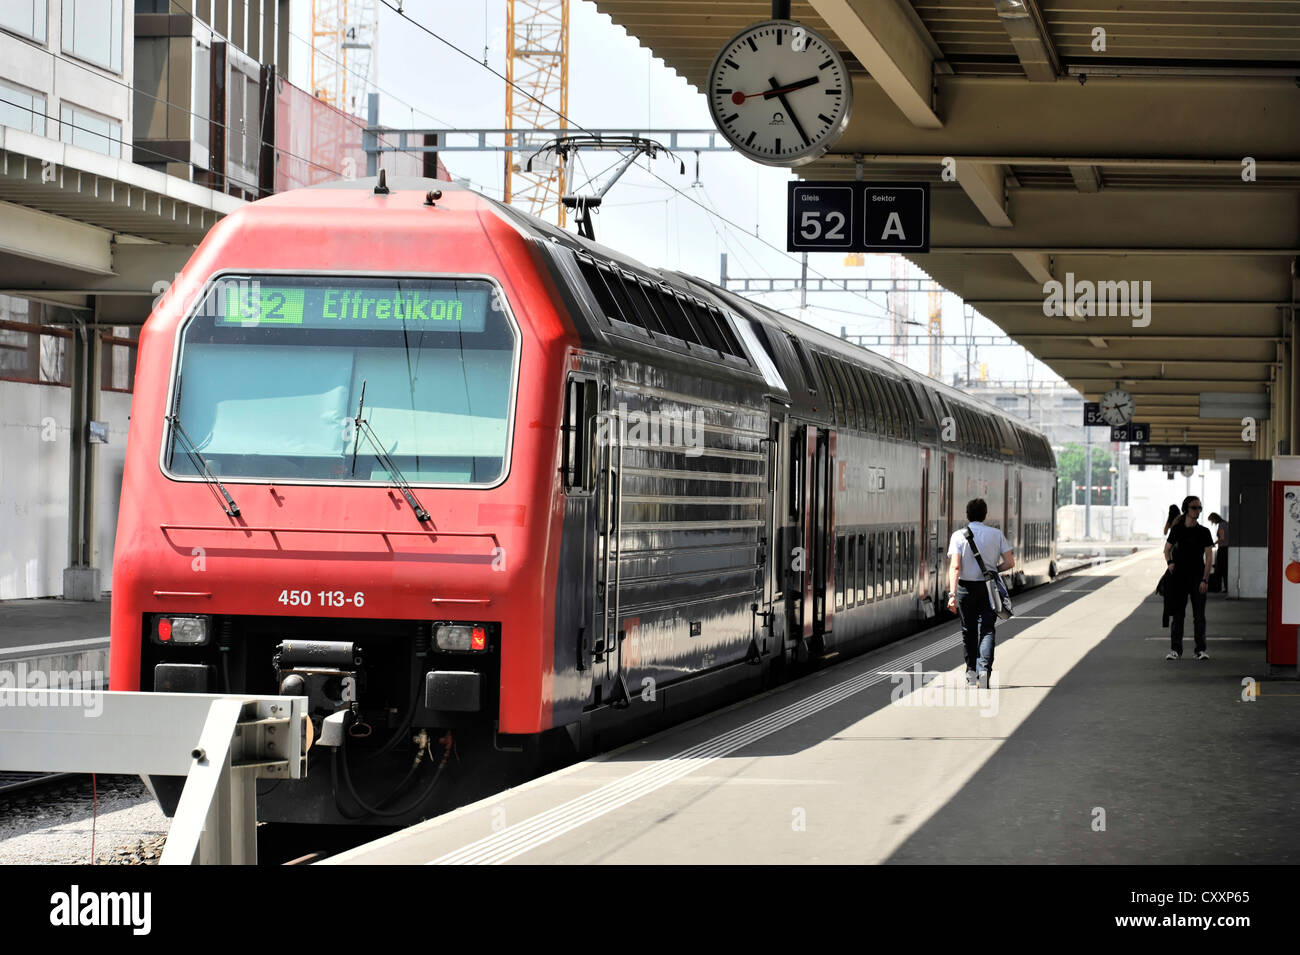 S-Bahn suburban train, S2 Effretikon, main railway station, Zurich, Switzerland, Europe Stock Photo